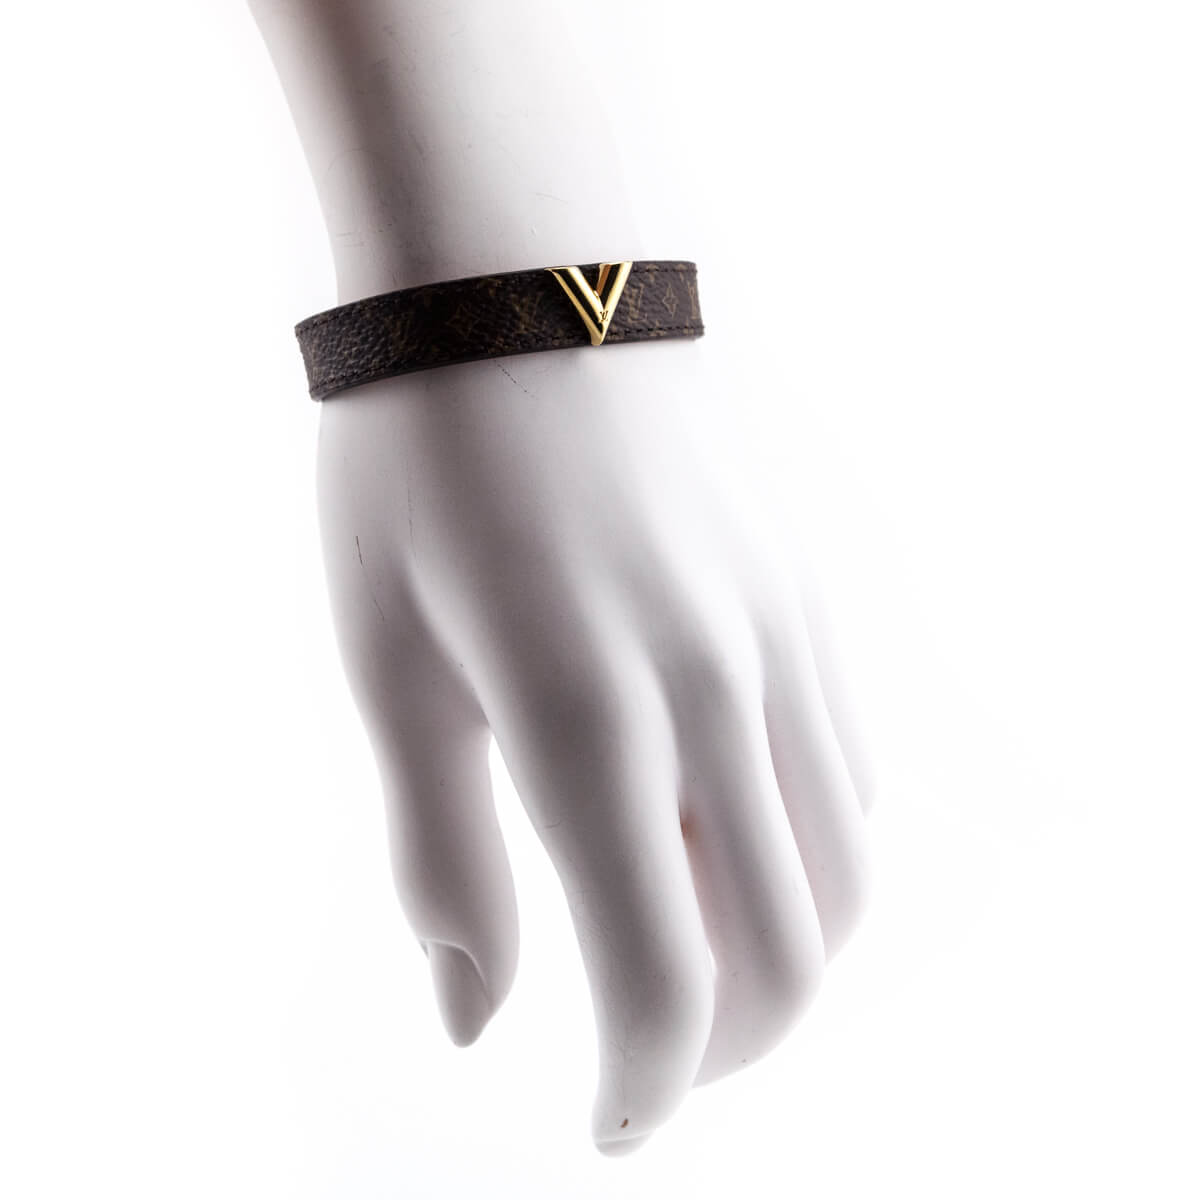 Louis Vuitton LV Iconic Bracelet Tan